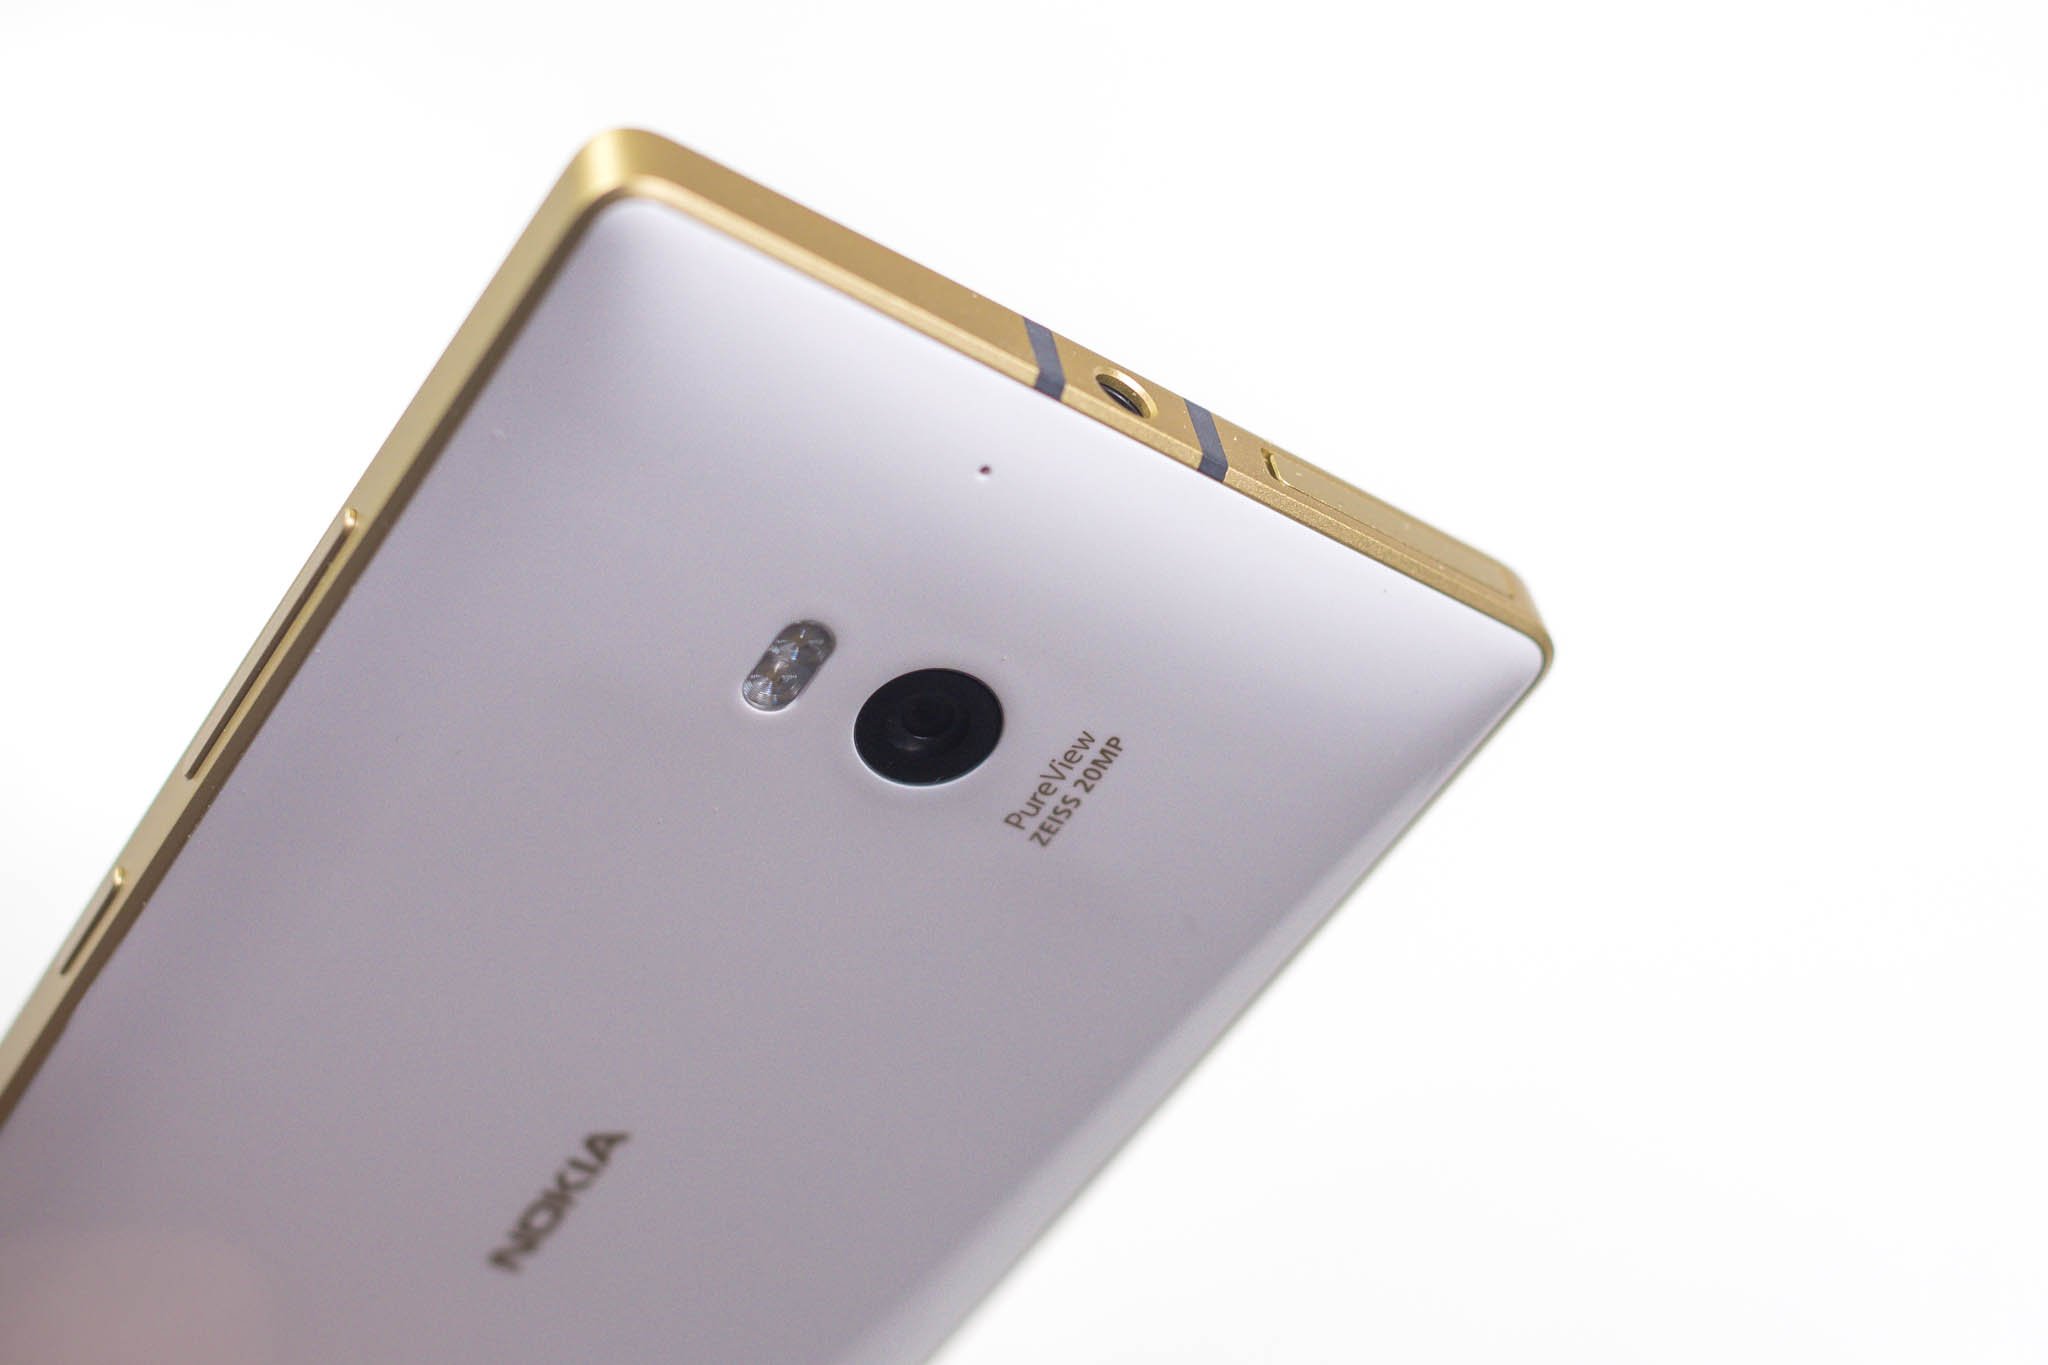 Lumia 930 in white